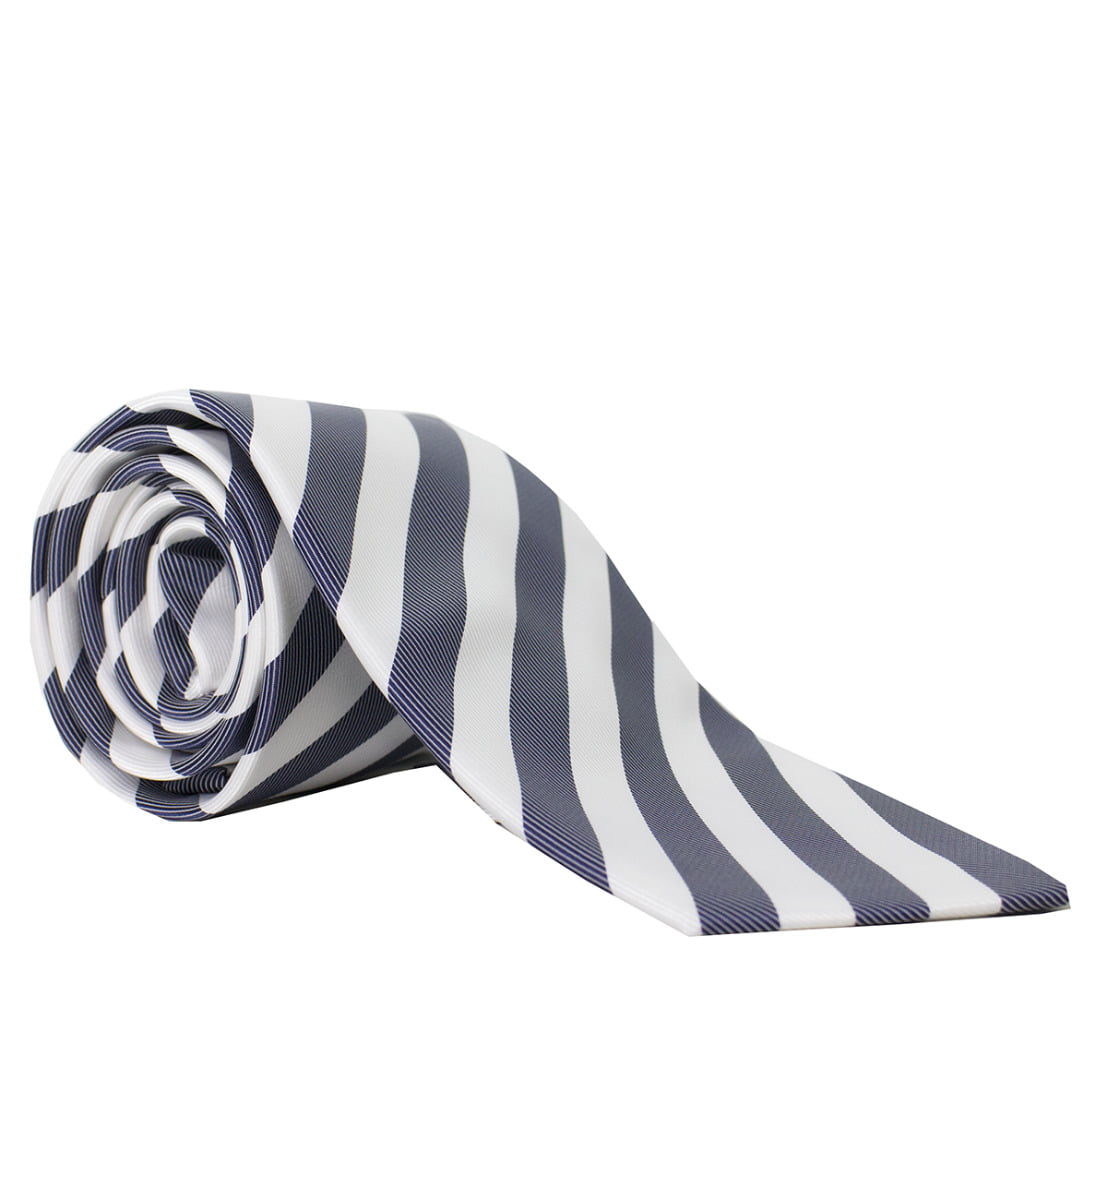 Cravatta uomo blu denim righe diagonali bianche 8cm di larghezza made in italy